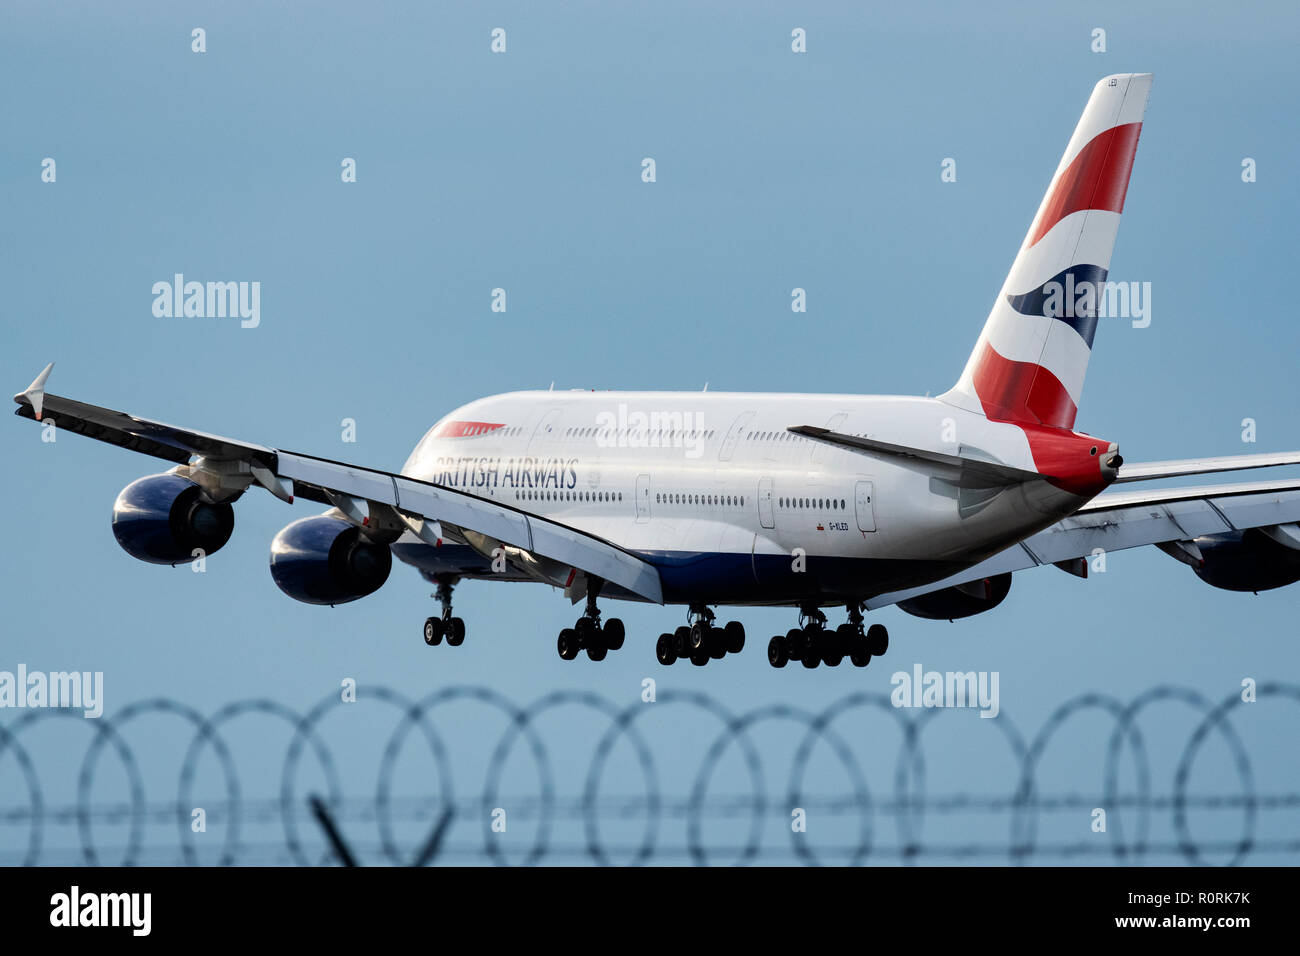 British Airways plane Airbus A380 airplane aeroplane jet airliner jetliner landing Stock Photo